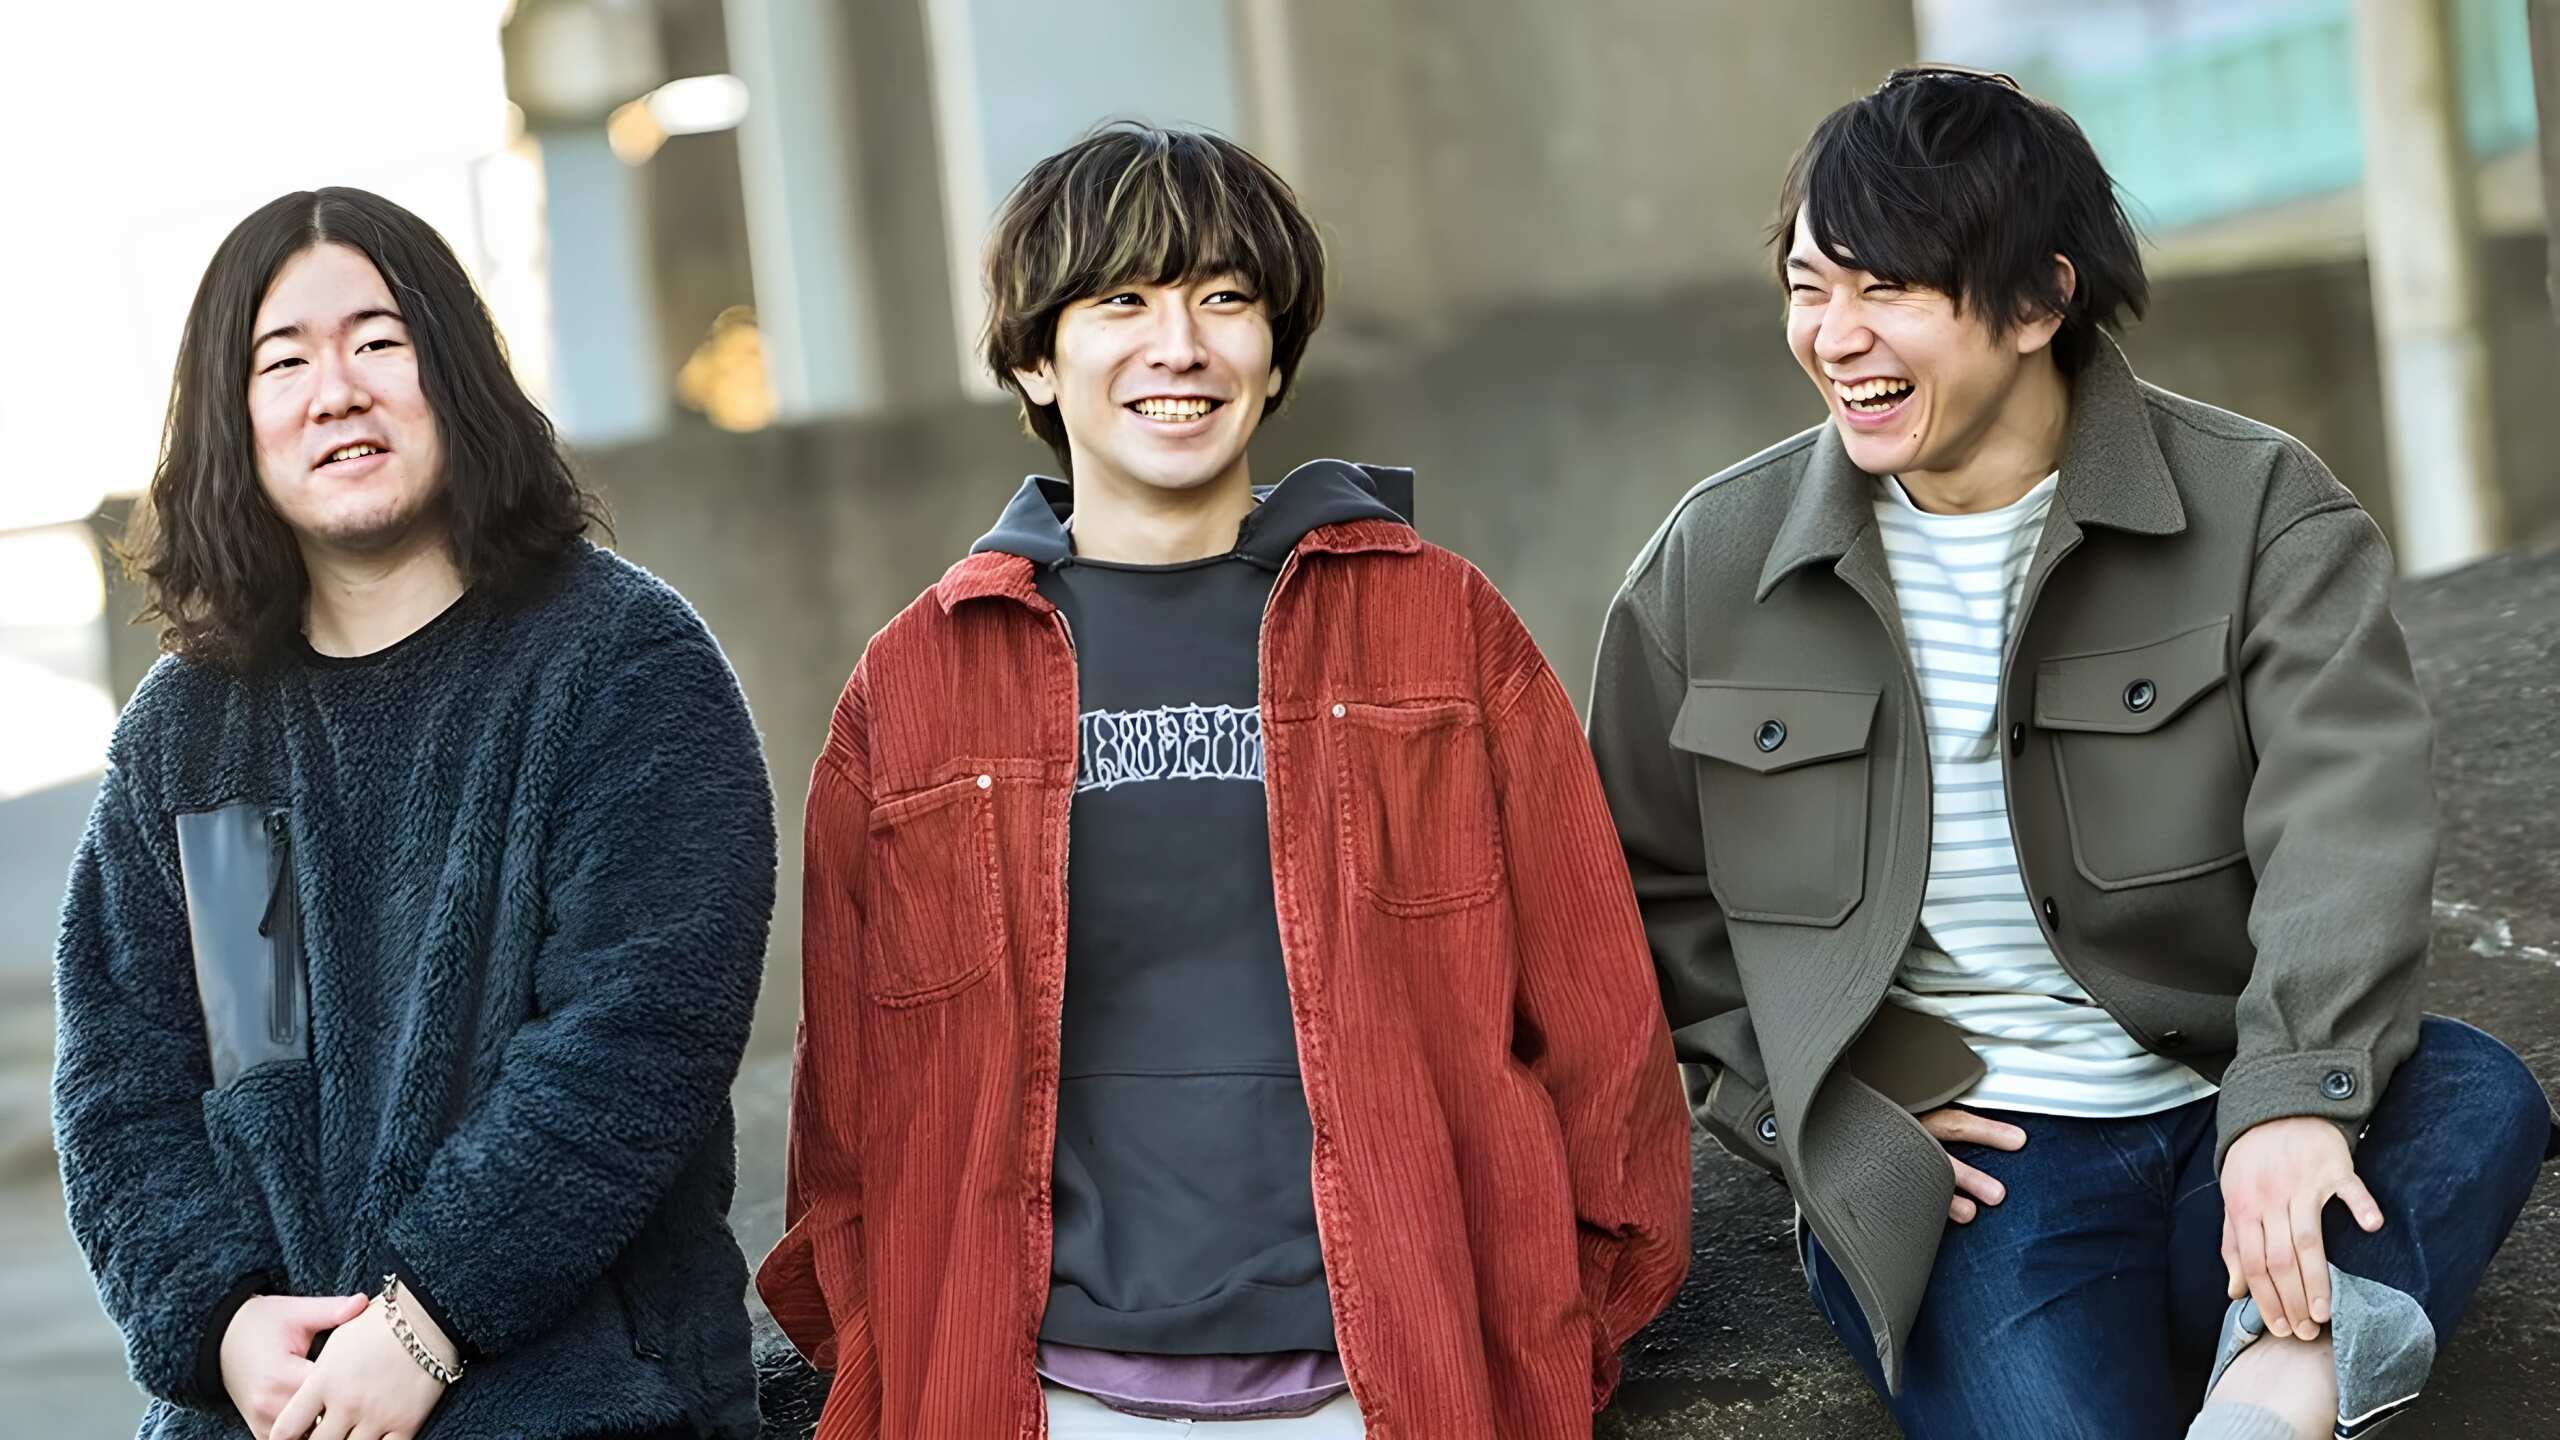 The Members Of My Hair Is Bad - Shiiki Tomomi, Yamamoto Hiroki, And Yamada Jun Respectively (Rolling Stones)